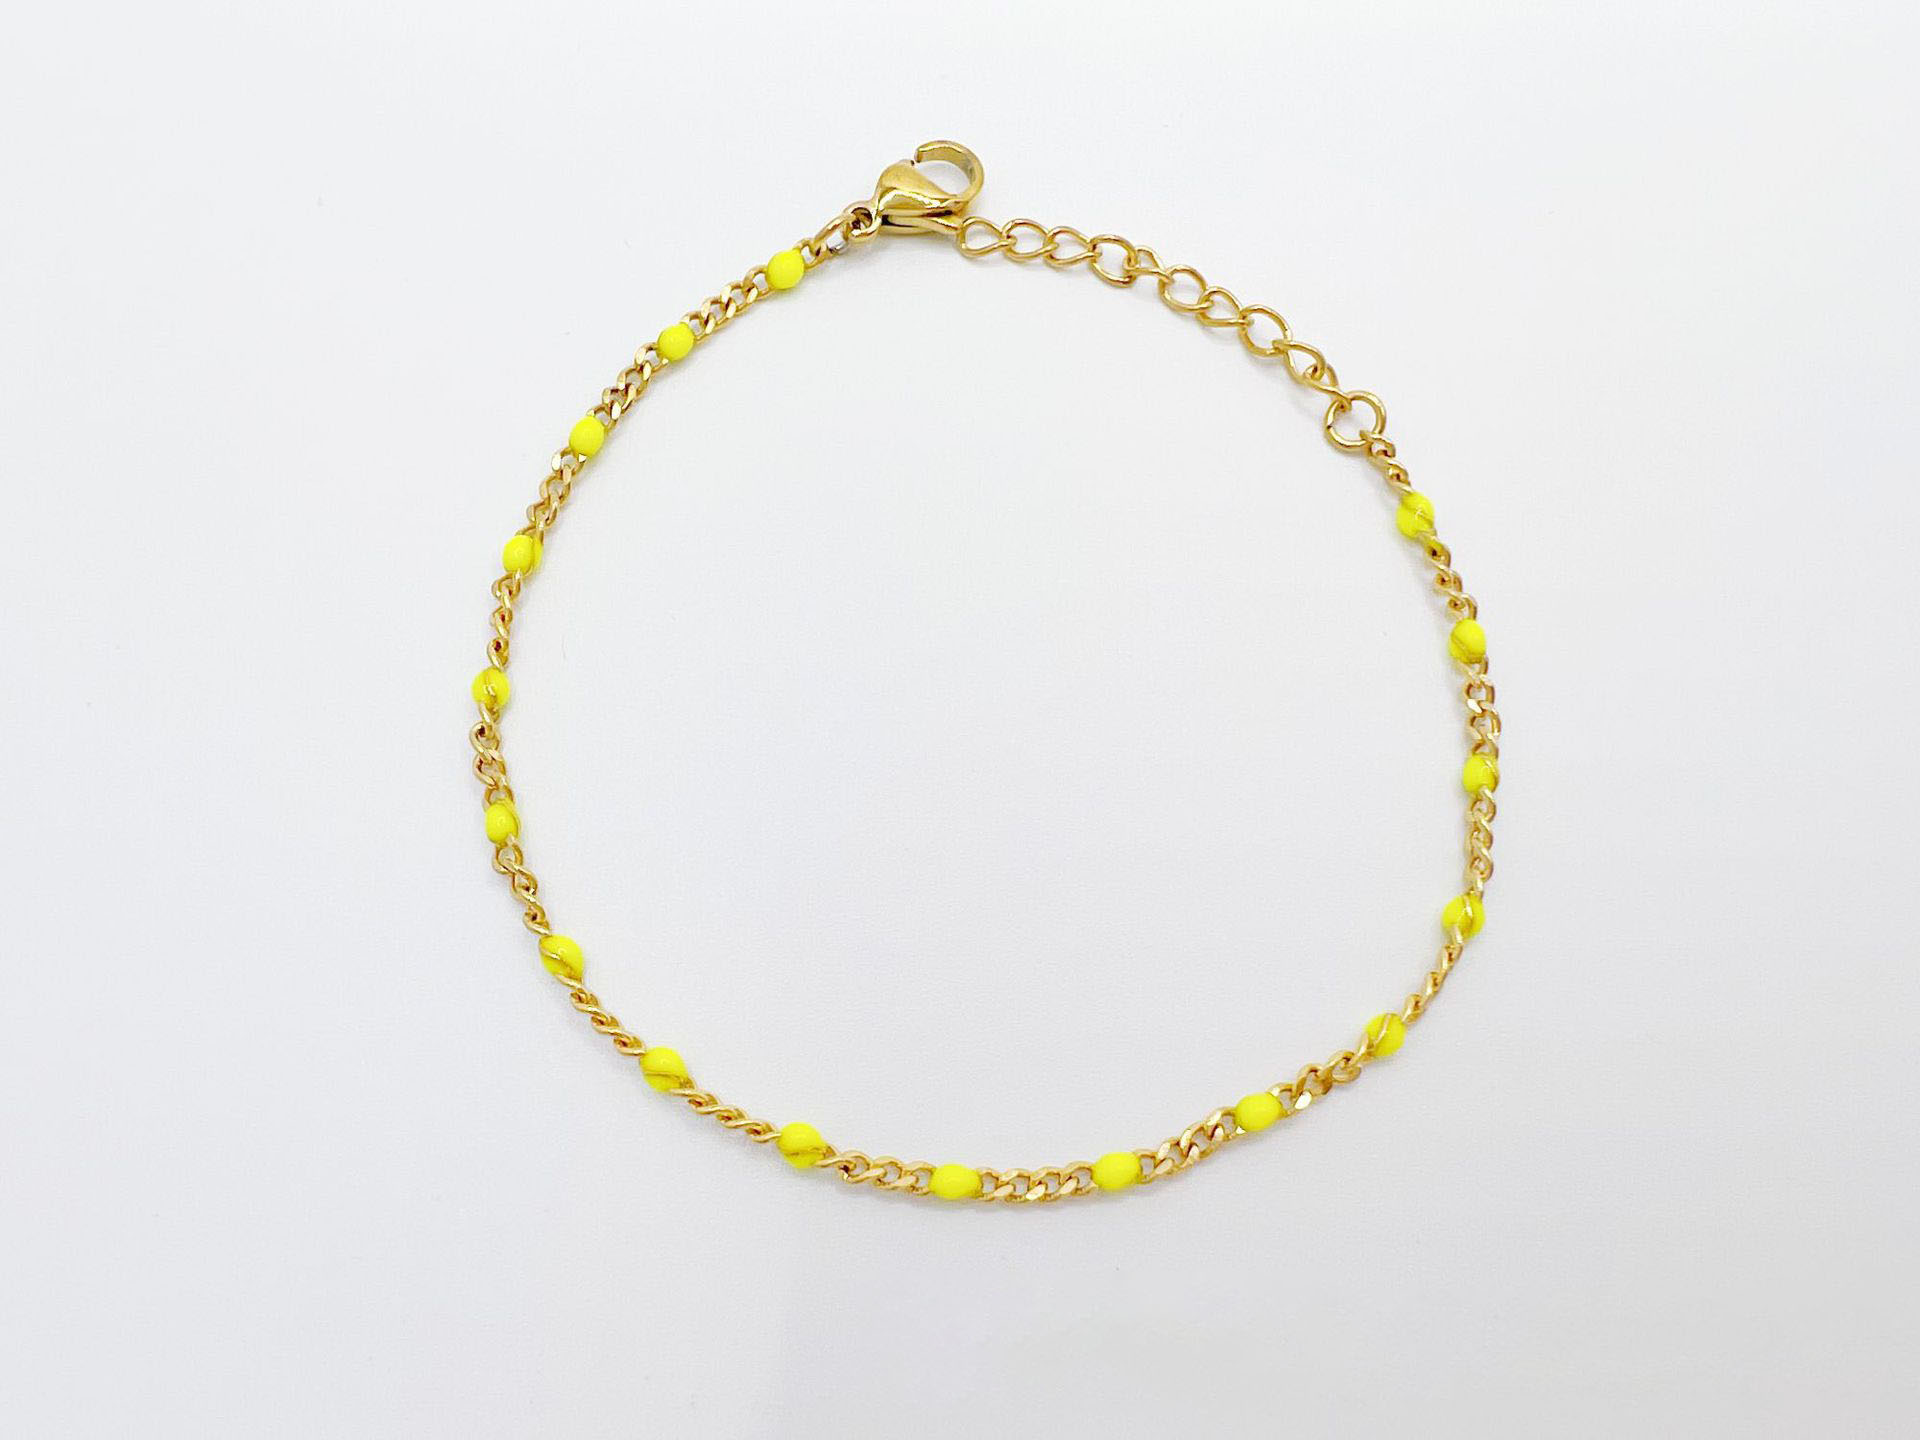 Bracelet fluorescent yellow